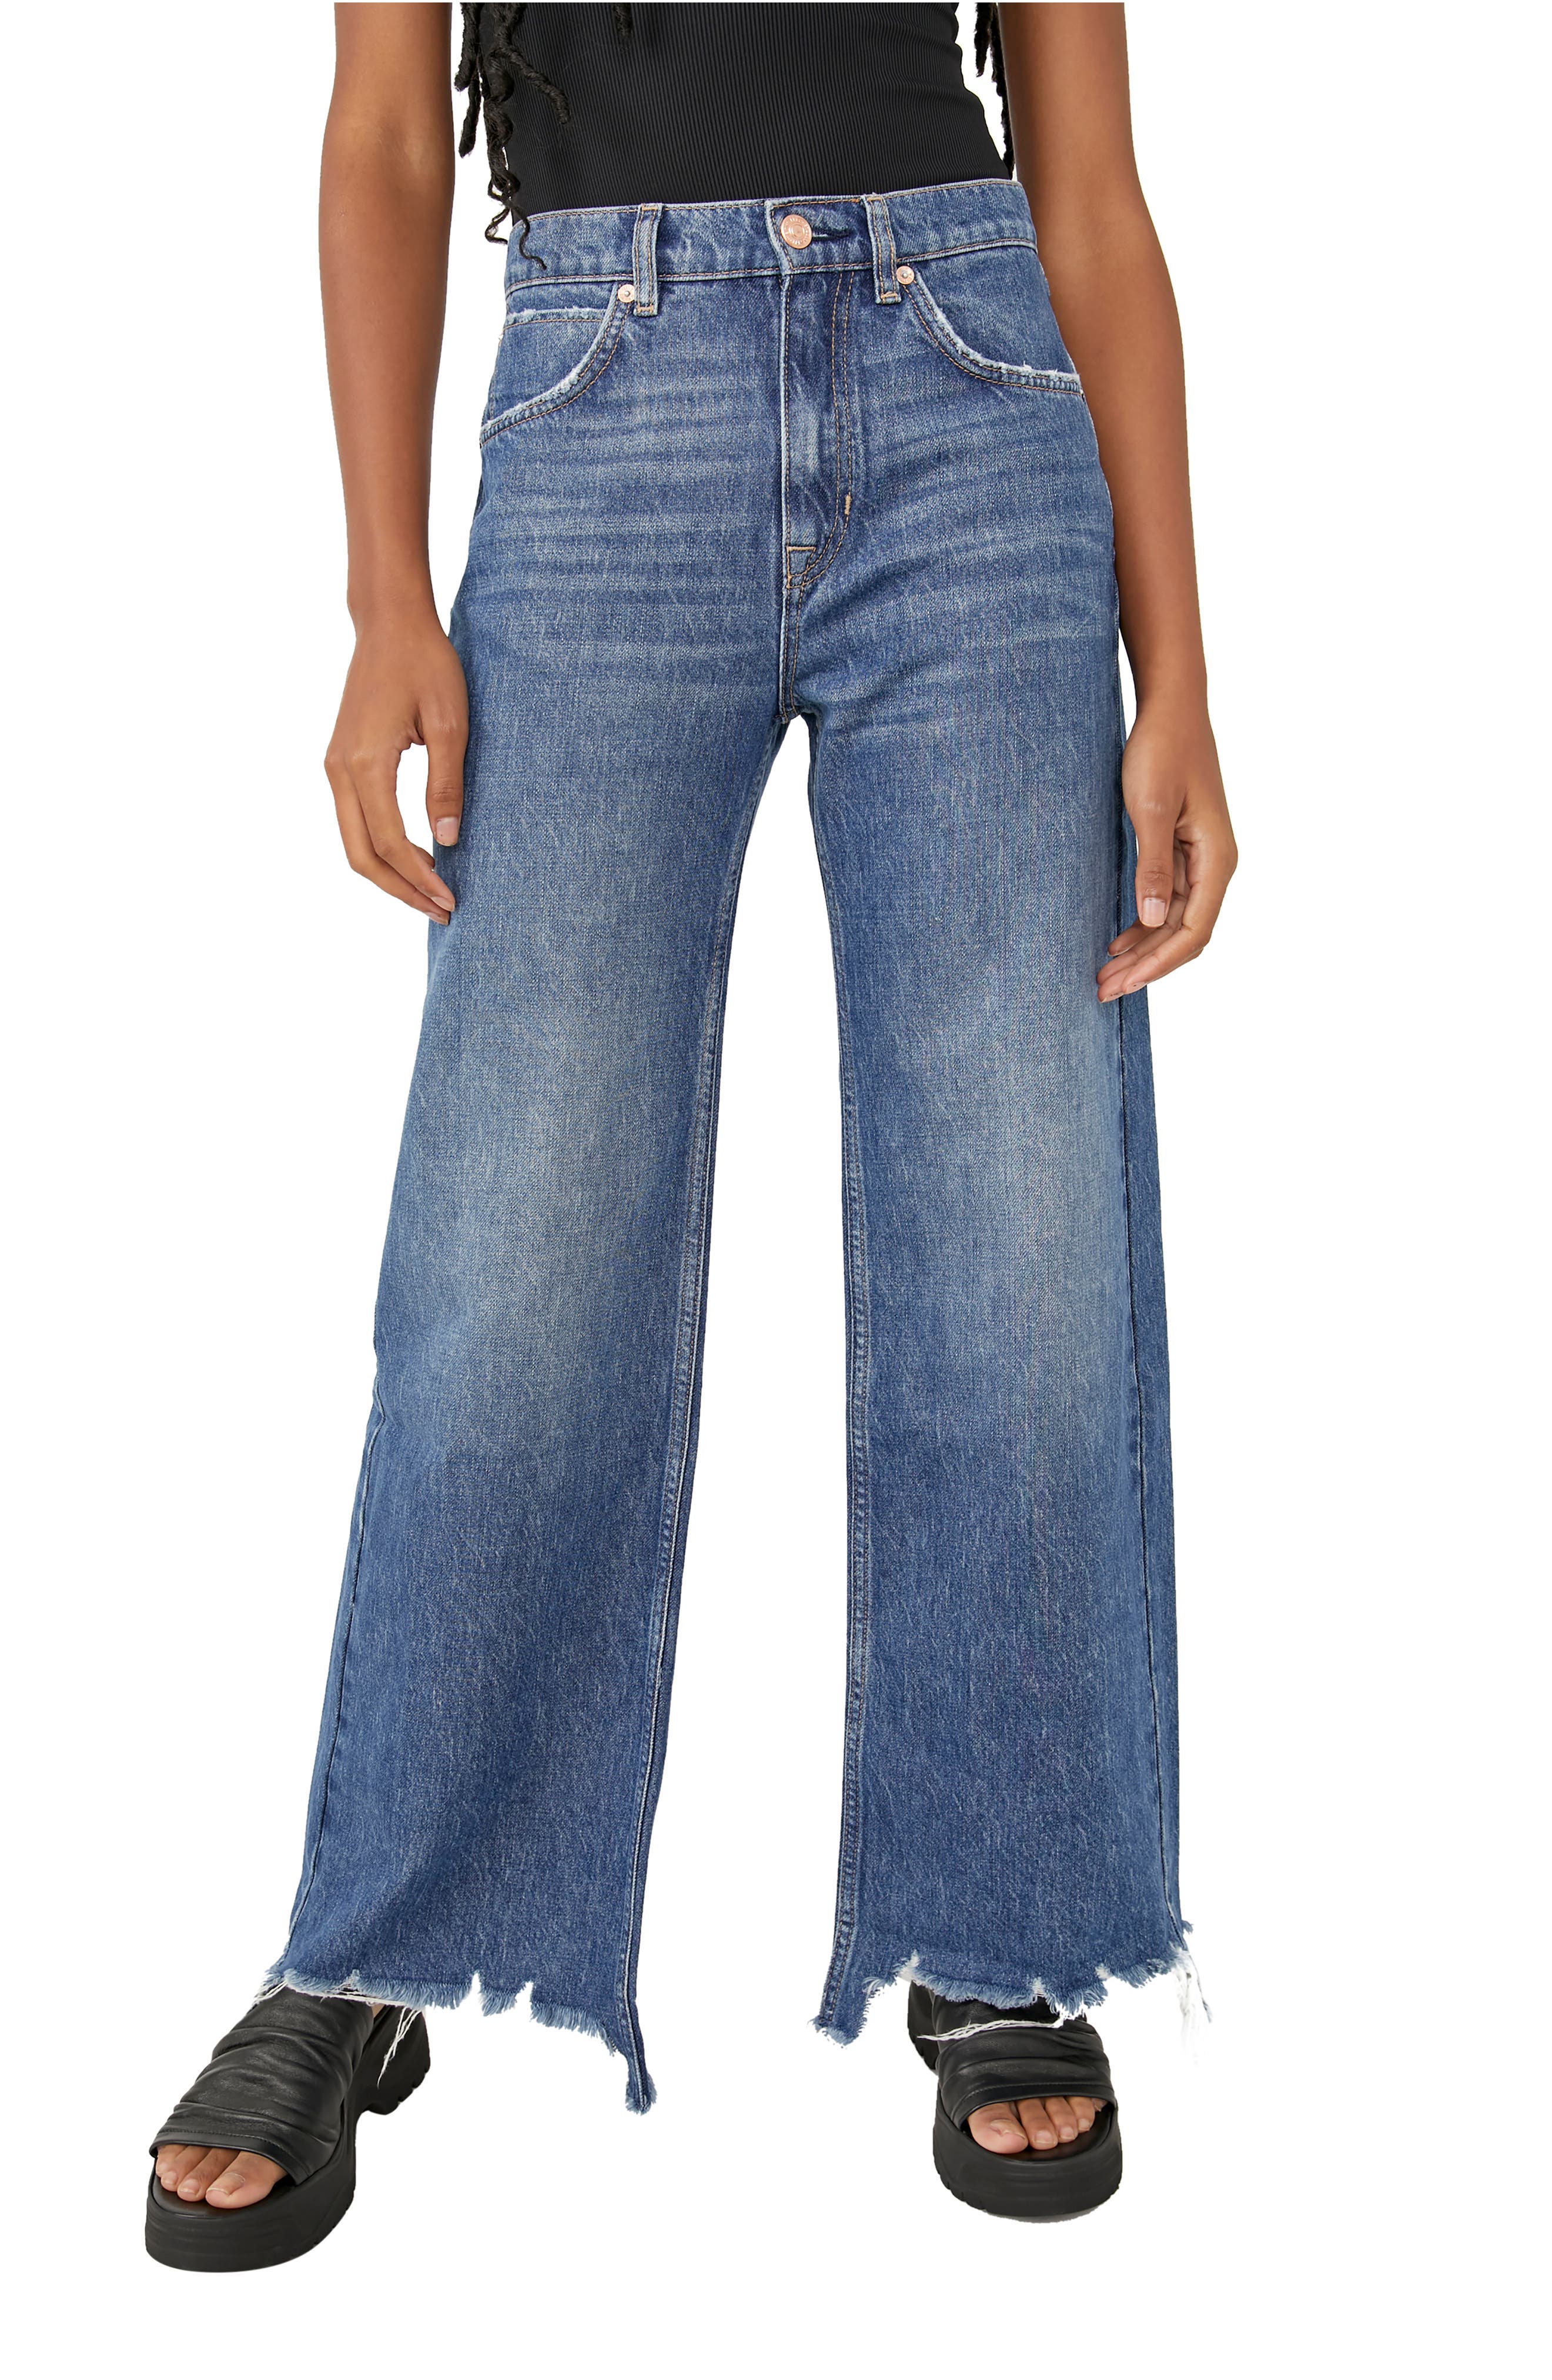 NEW Free People Womens Jeans Black Dylan Frayed Hem Crop OB819562-0010 $98